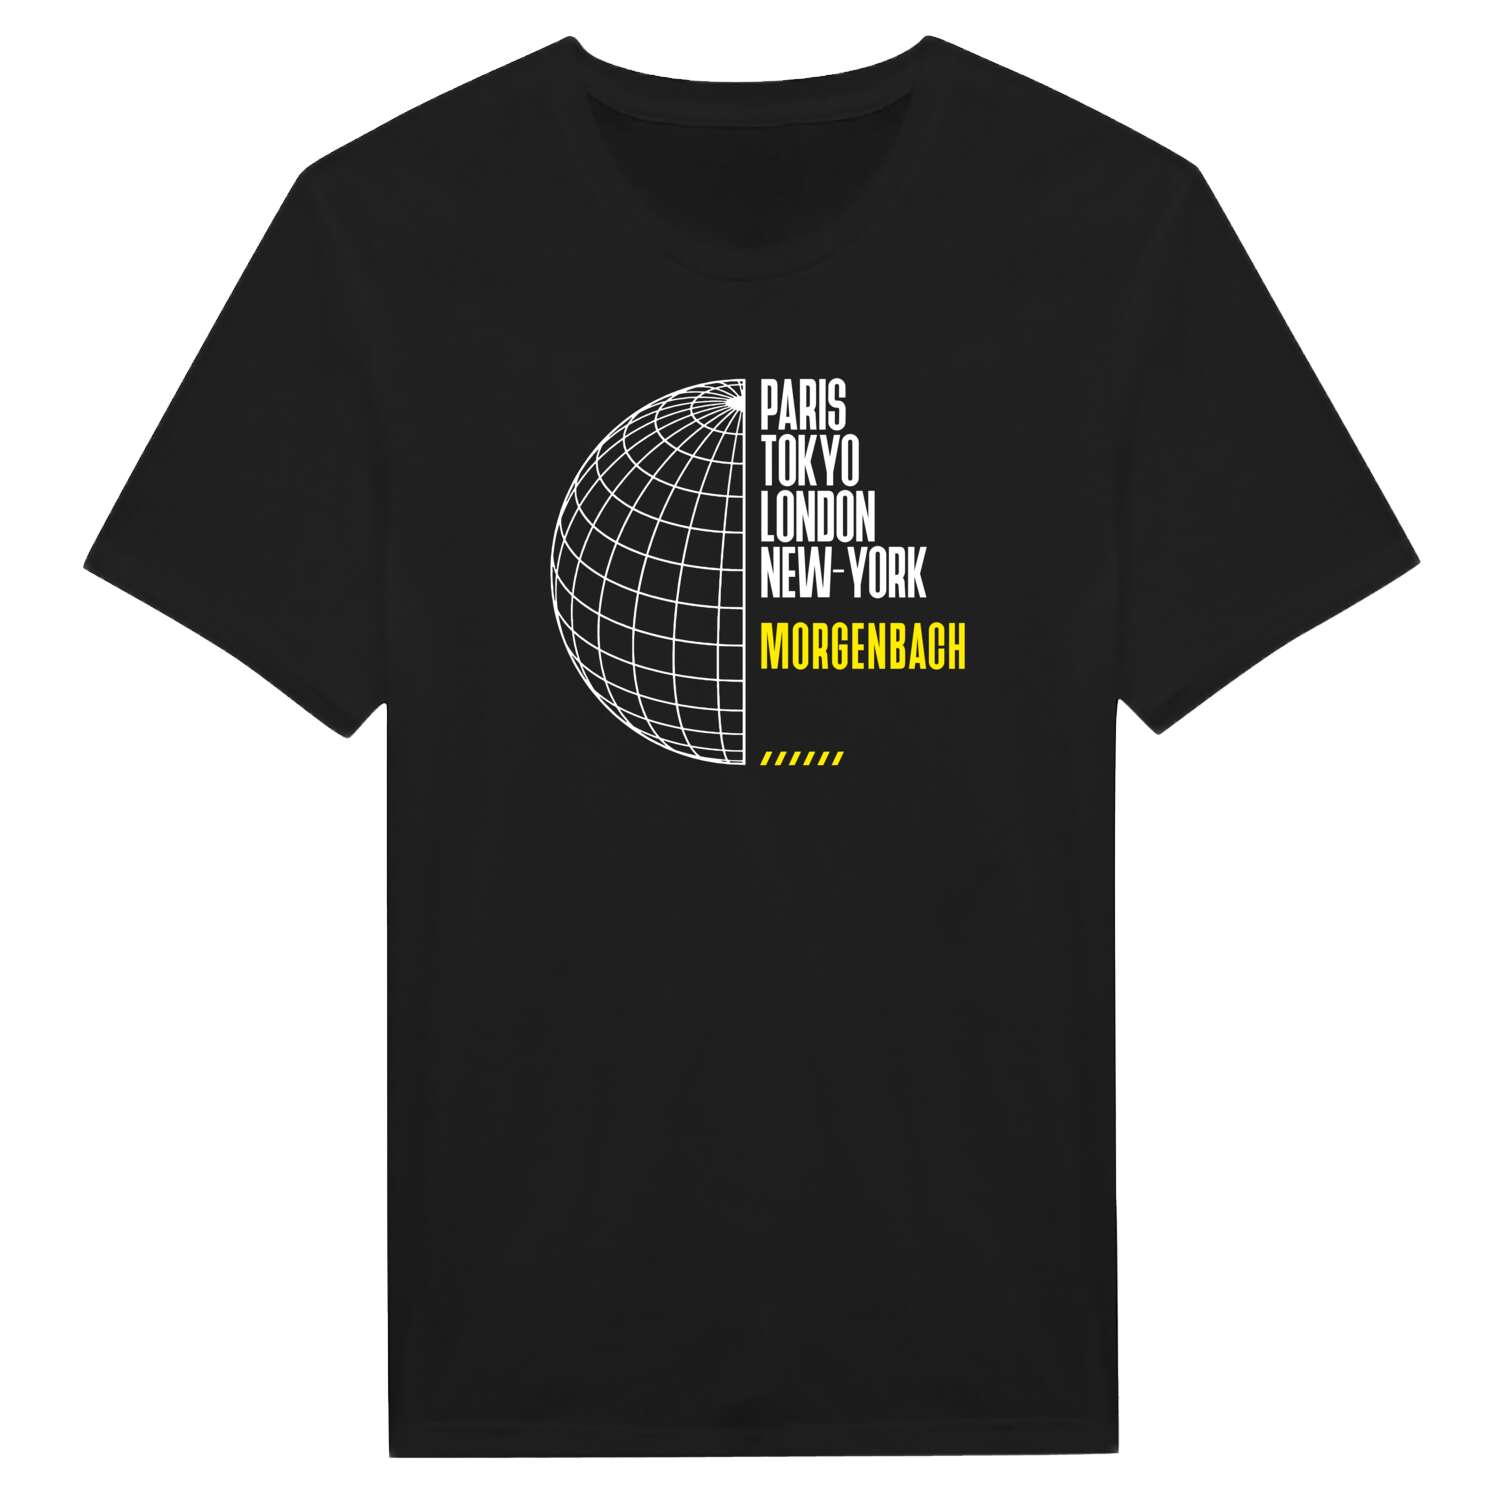 Morgenbach T-Shirt »Paris Tokyo London«